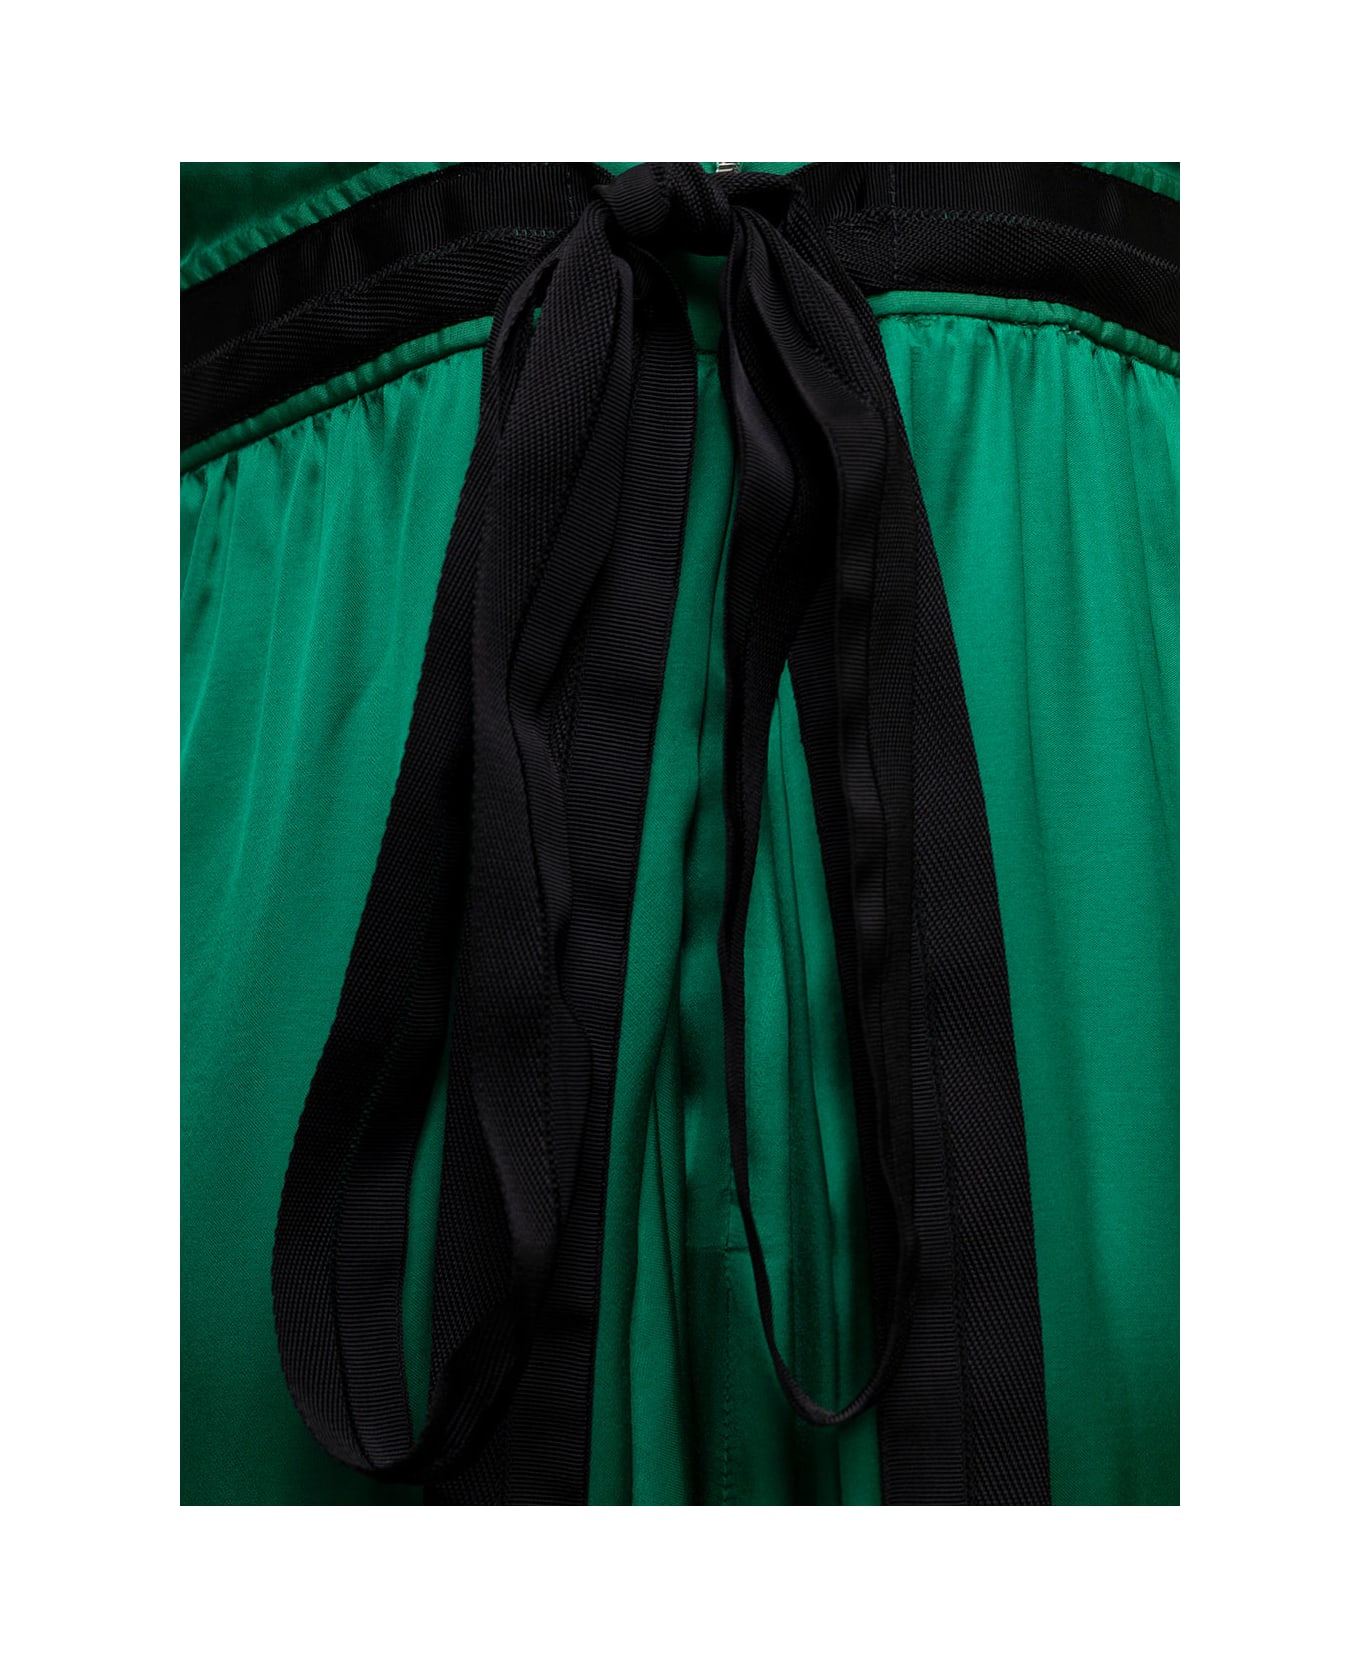 Pinko Woman's Anguria Green Satin Long Dress - Green